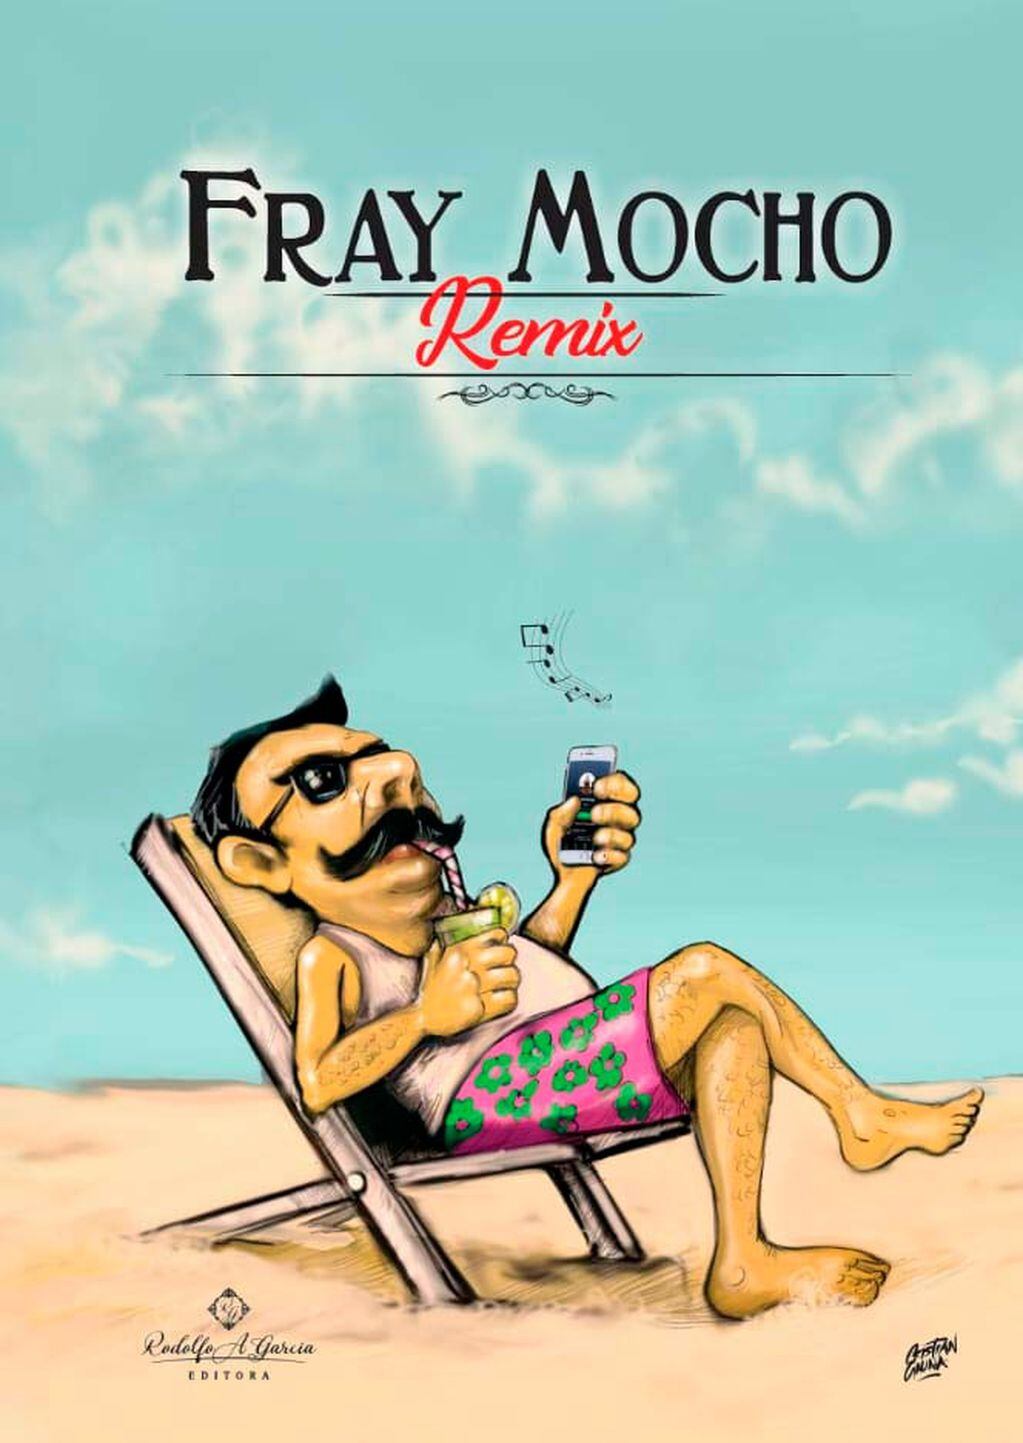 Se presenta Libro "Fray Mocho" Remix.